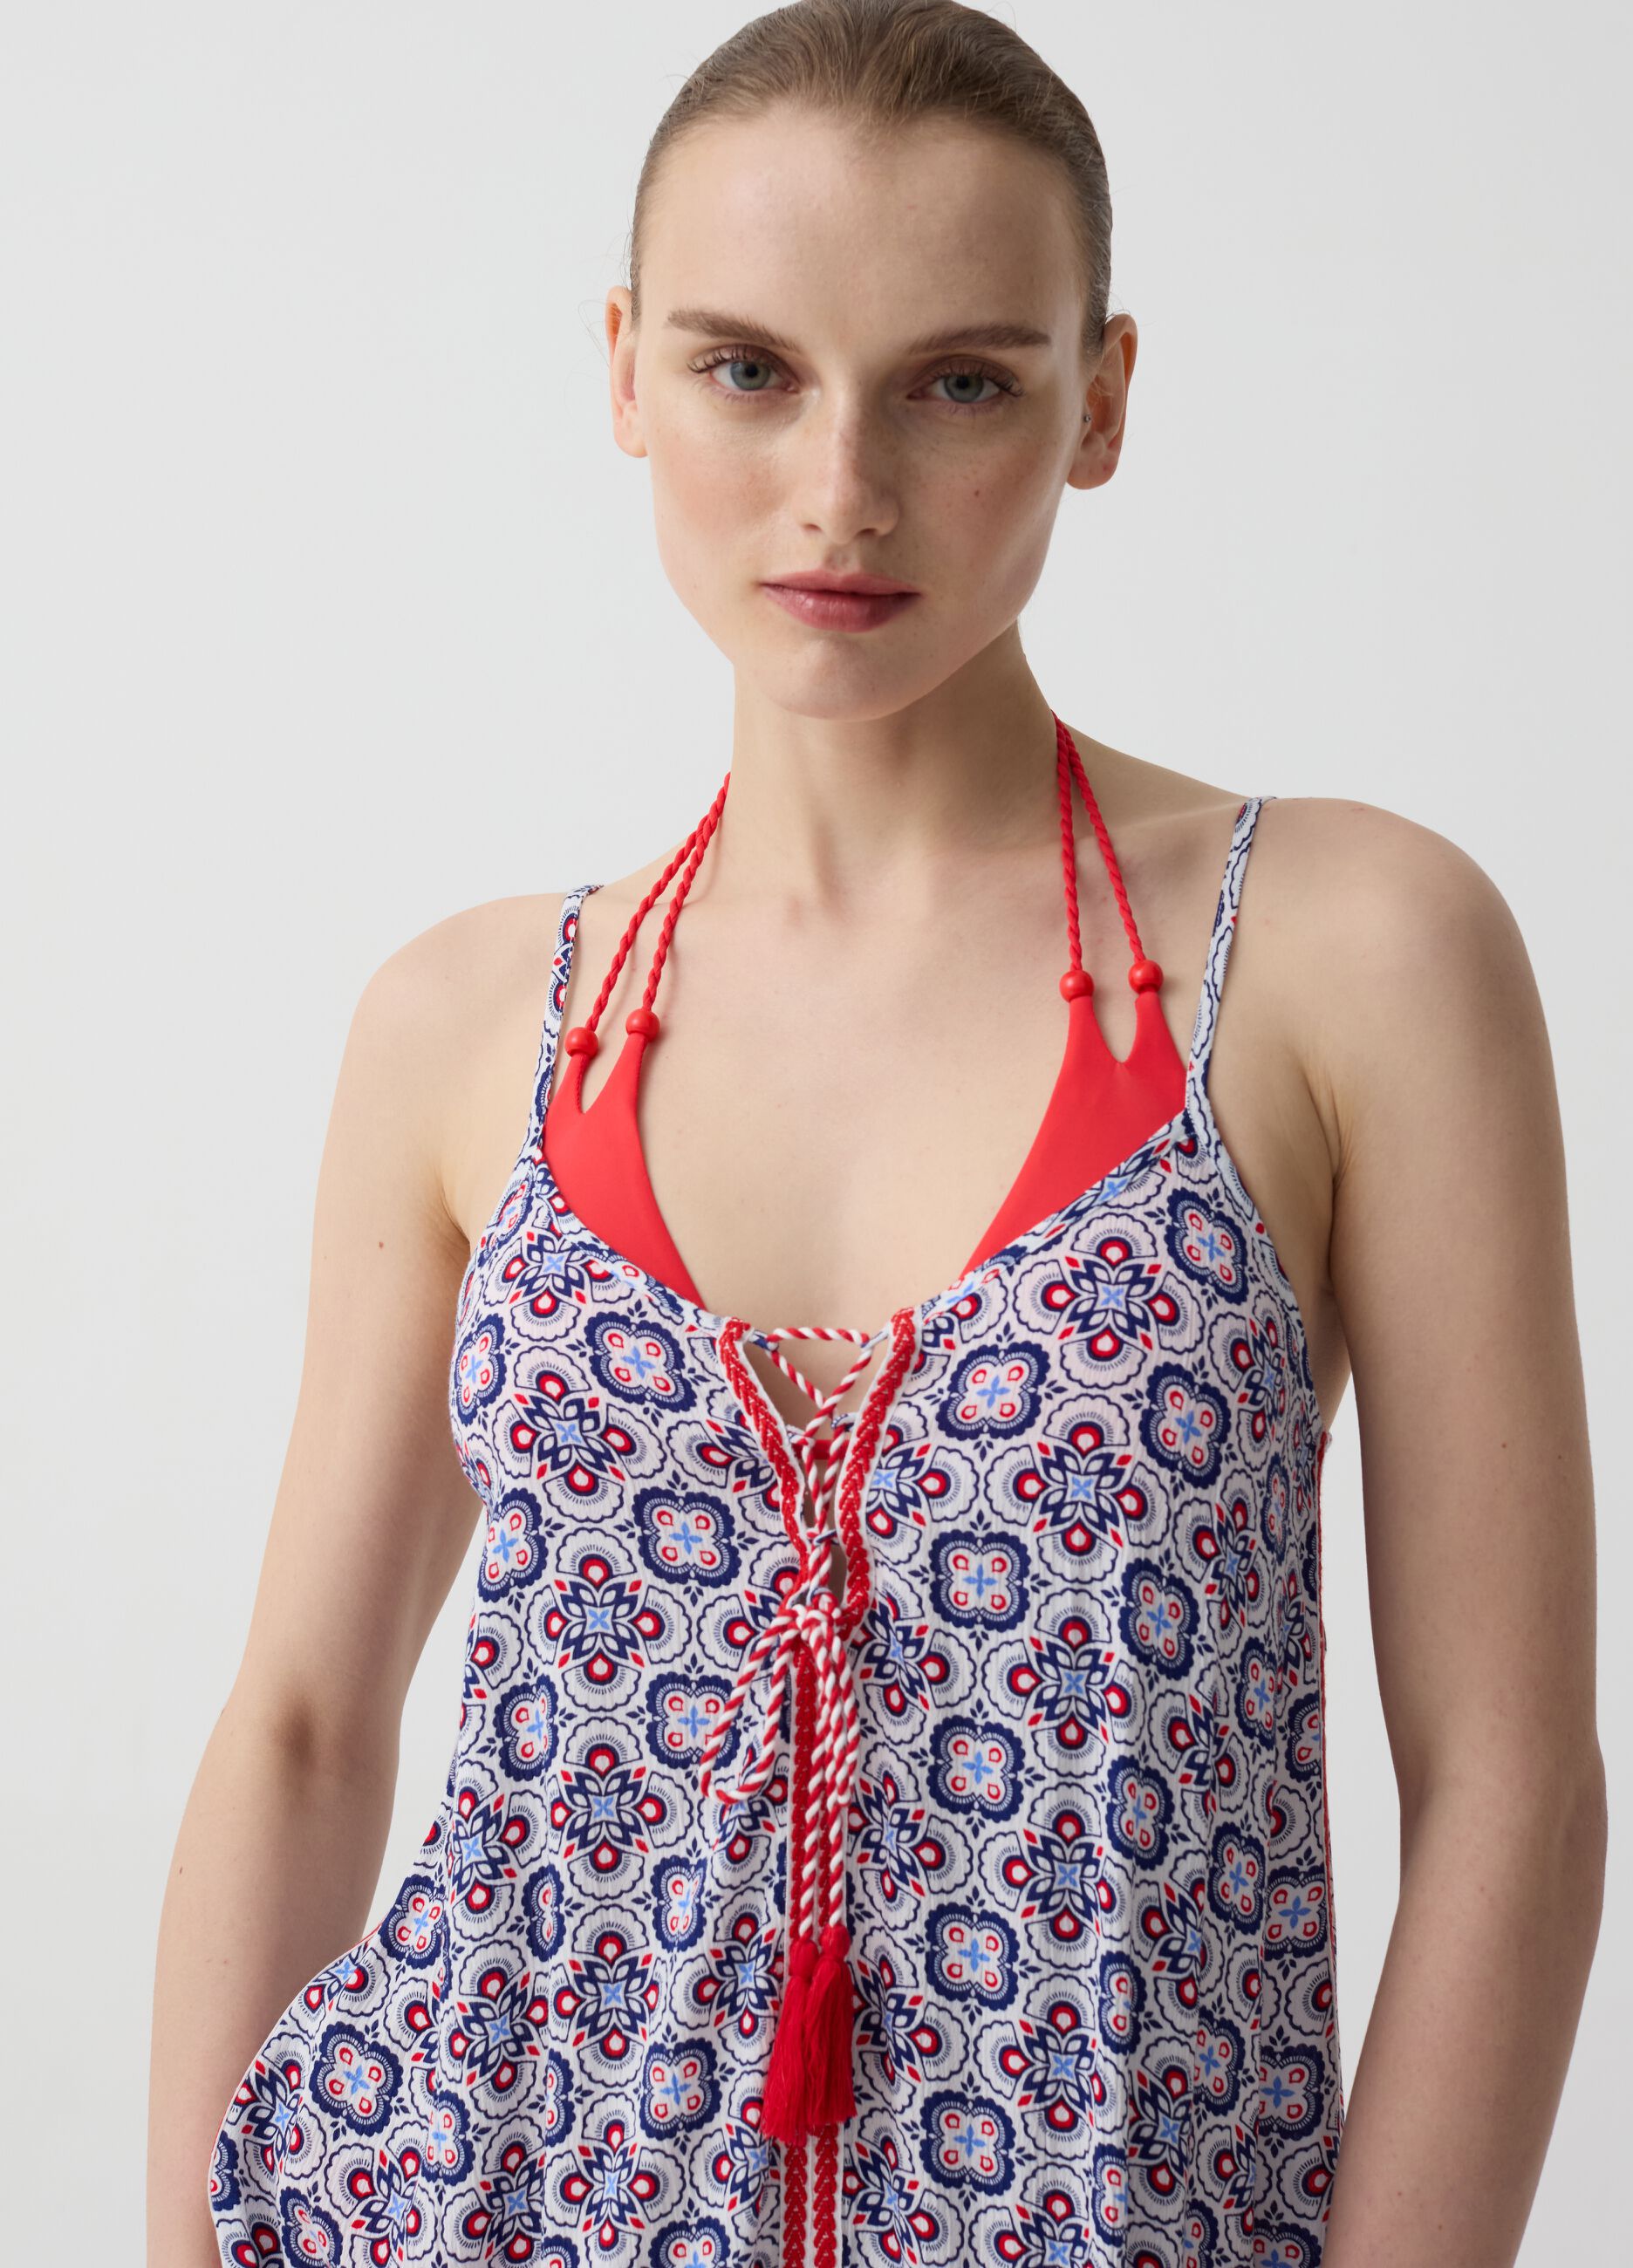 Positano summer dress with print